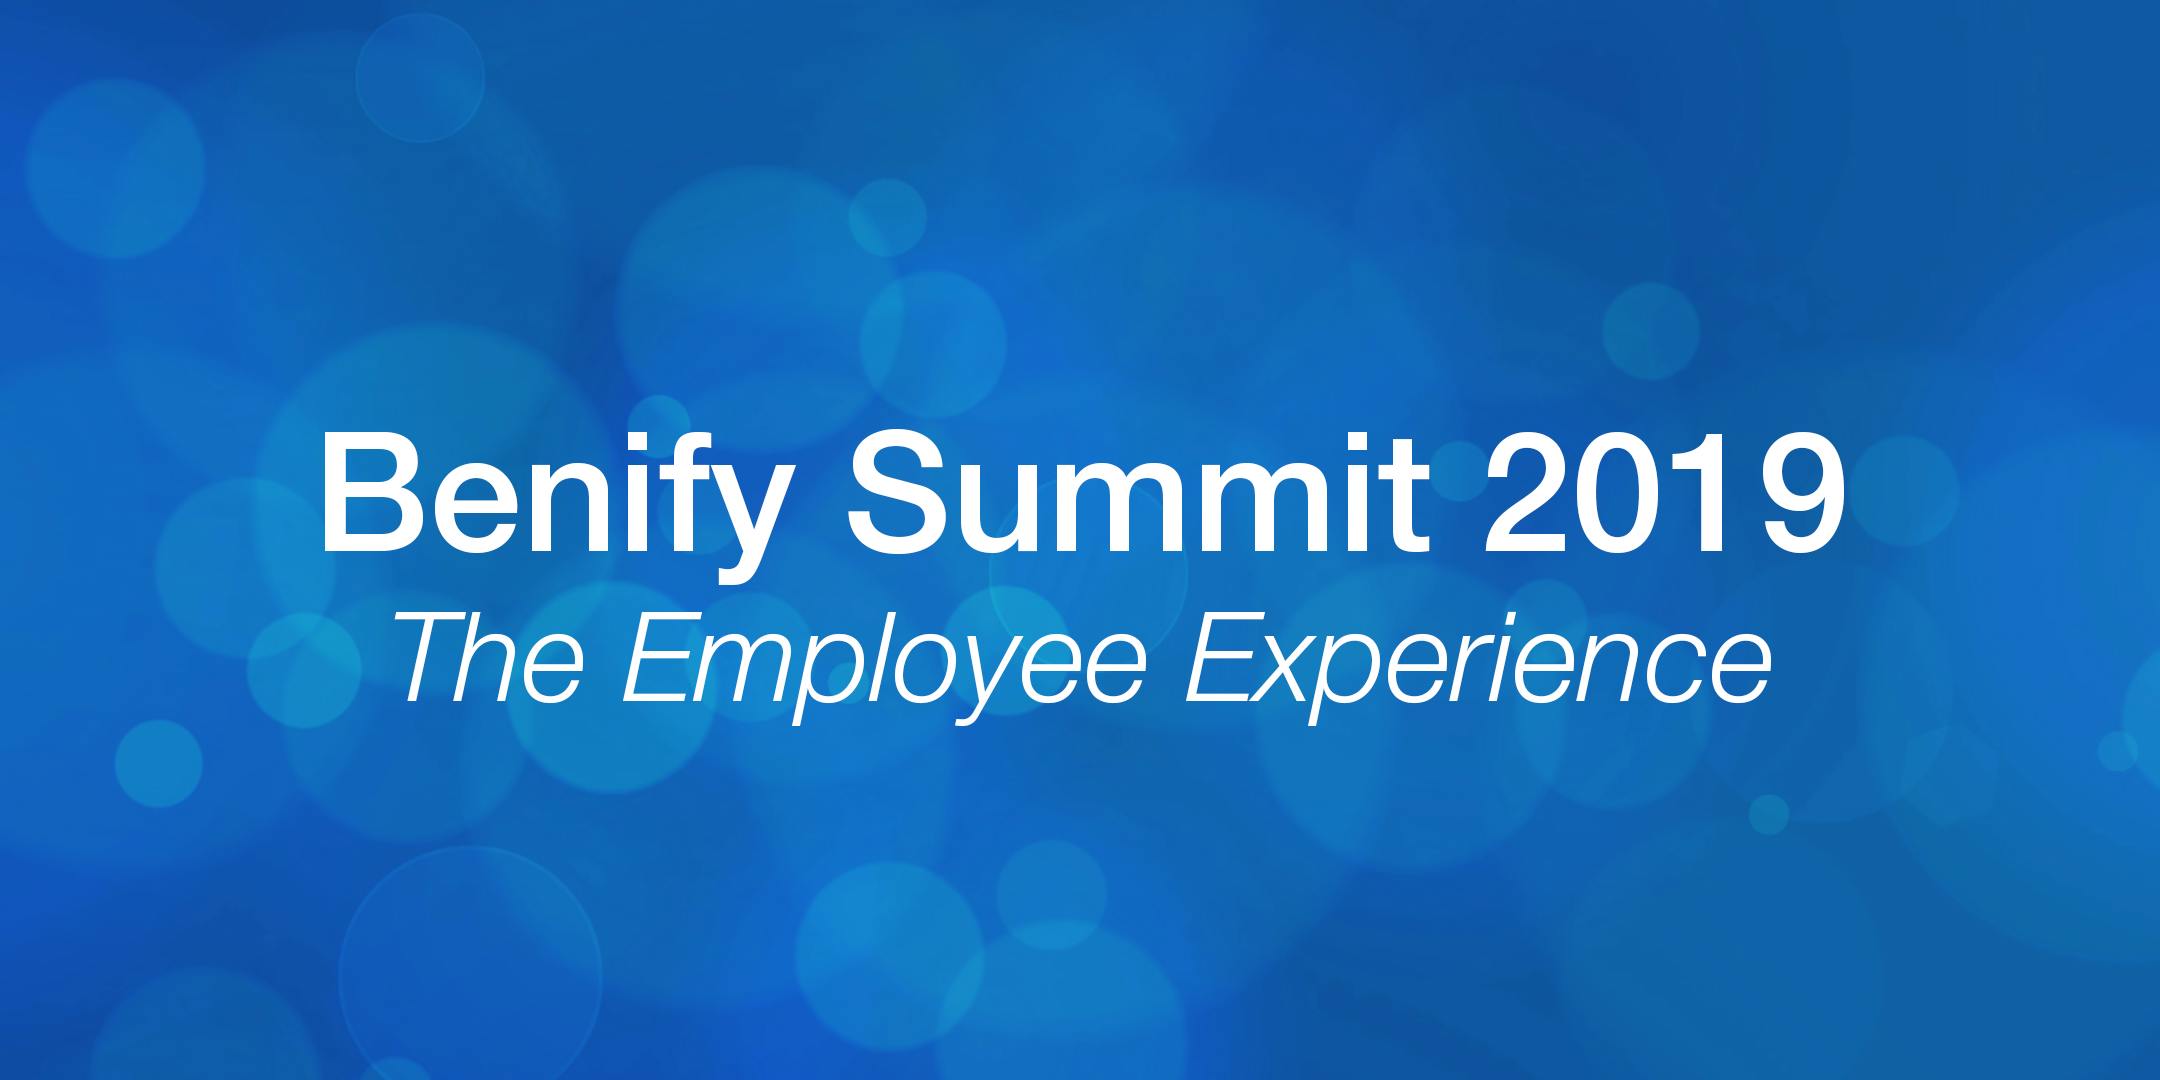 Benify Summit 2019 - Employee Experience